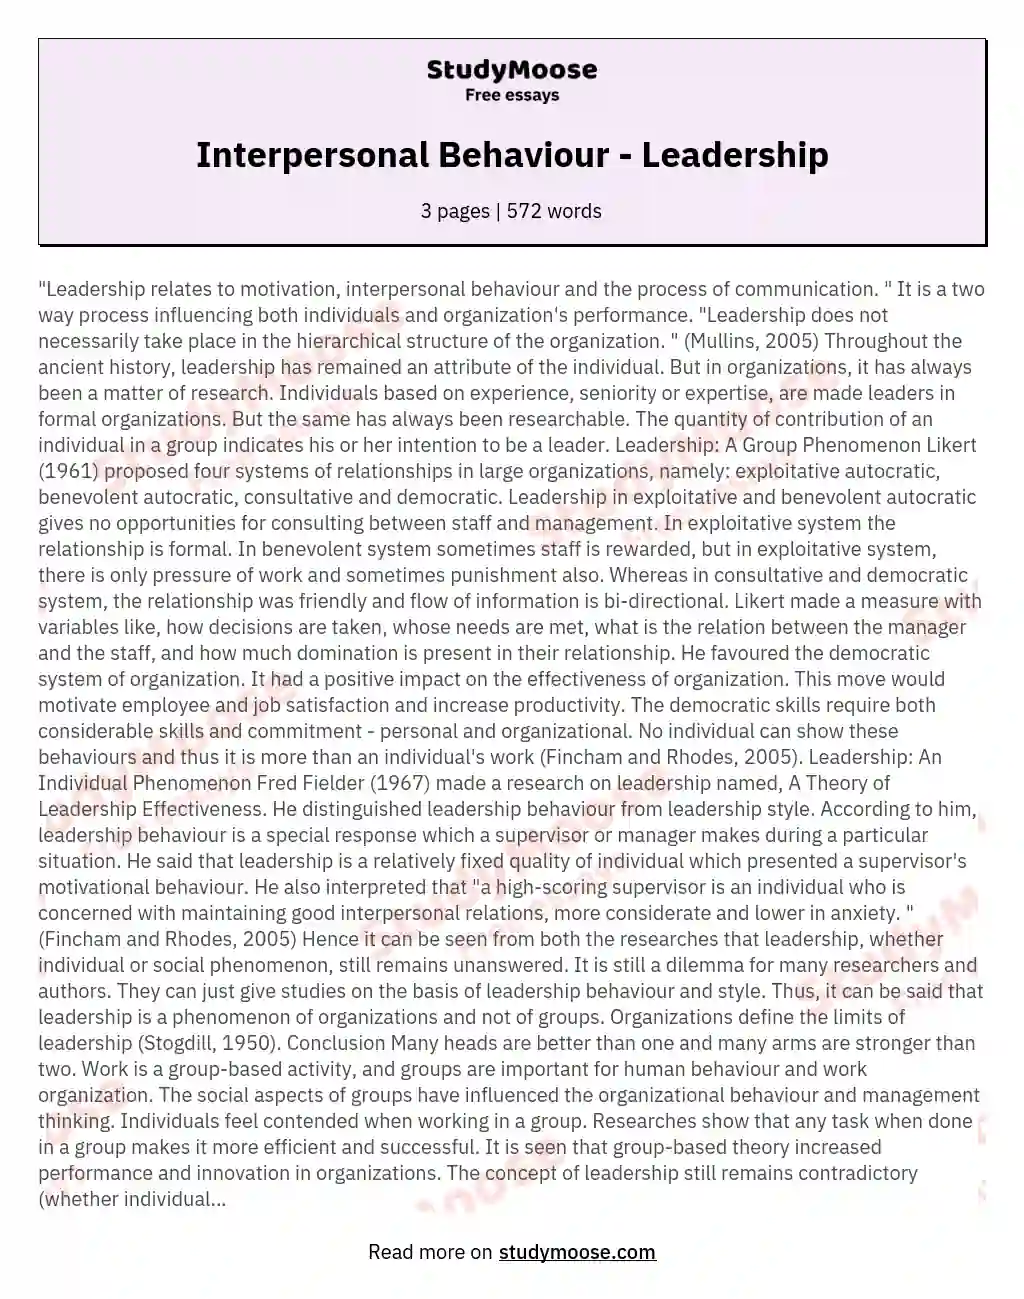 Interpersonal Behaviour - Leadership essay